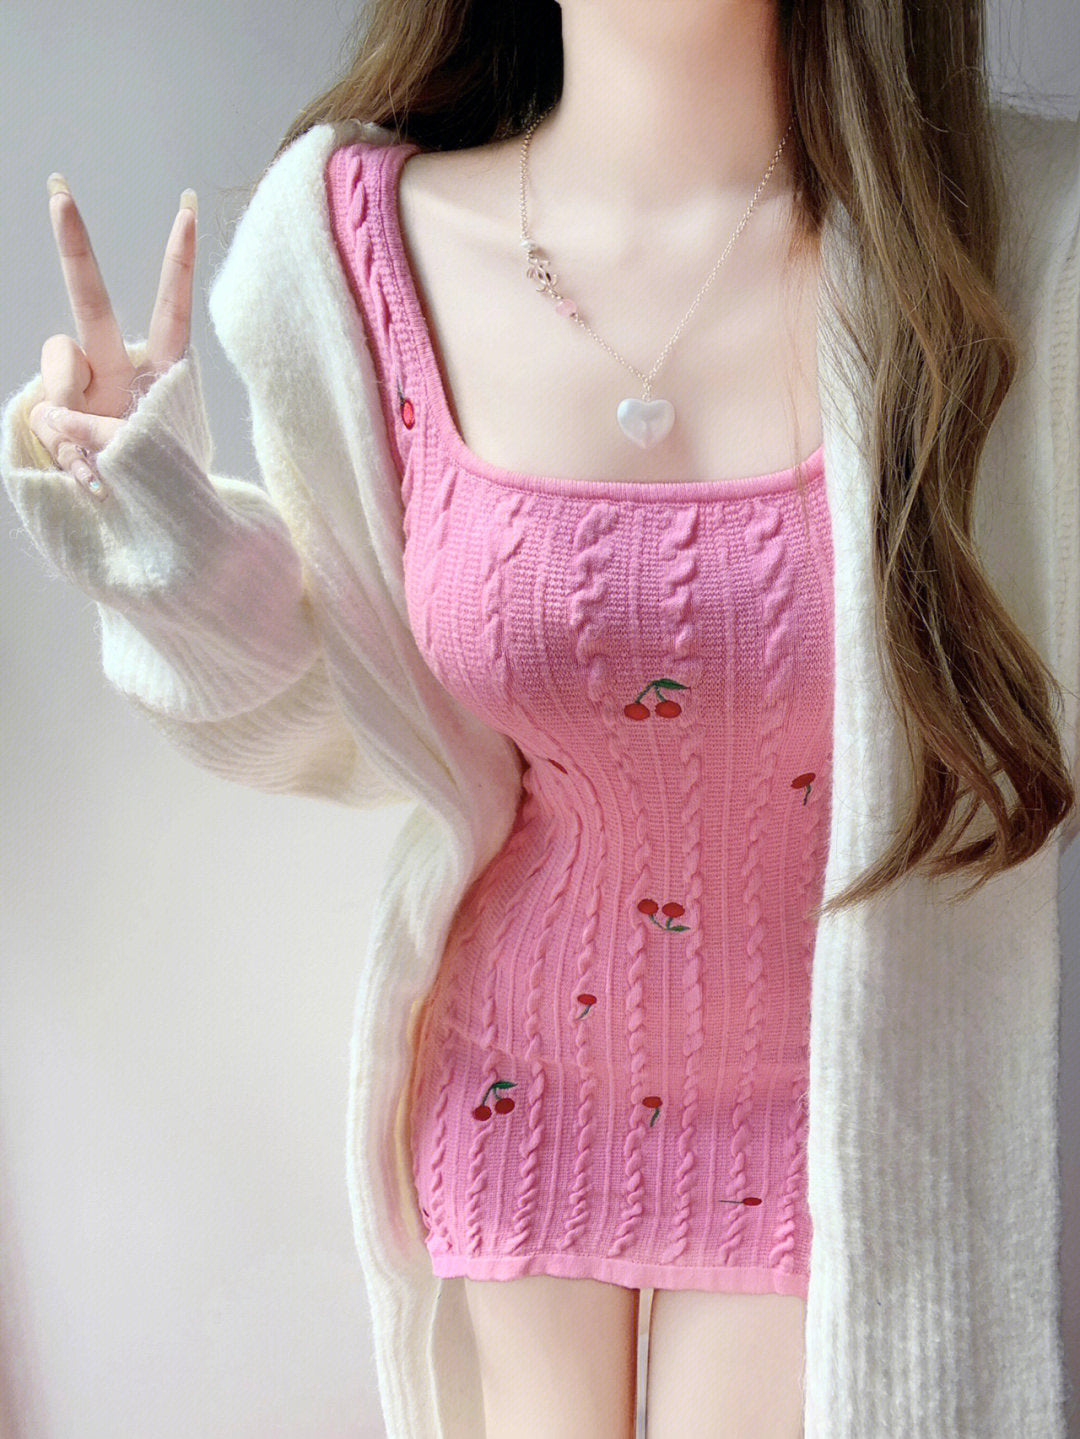 Pink Strap Dress  DB7920